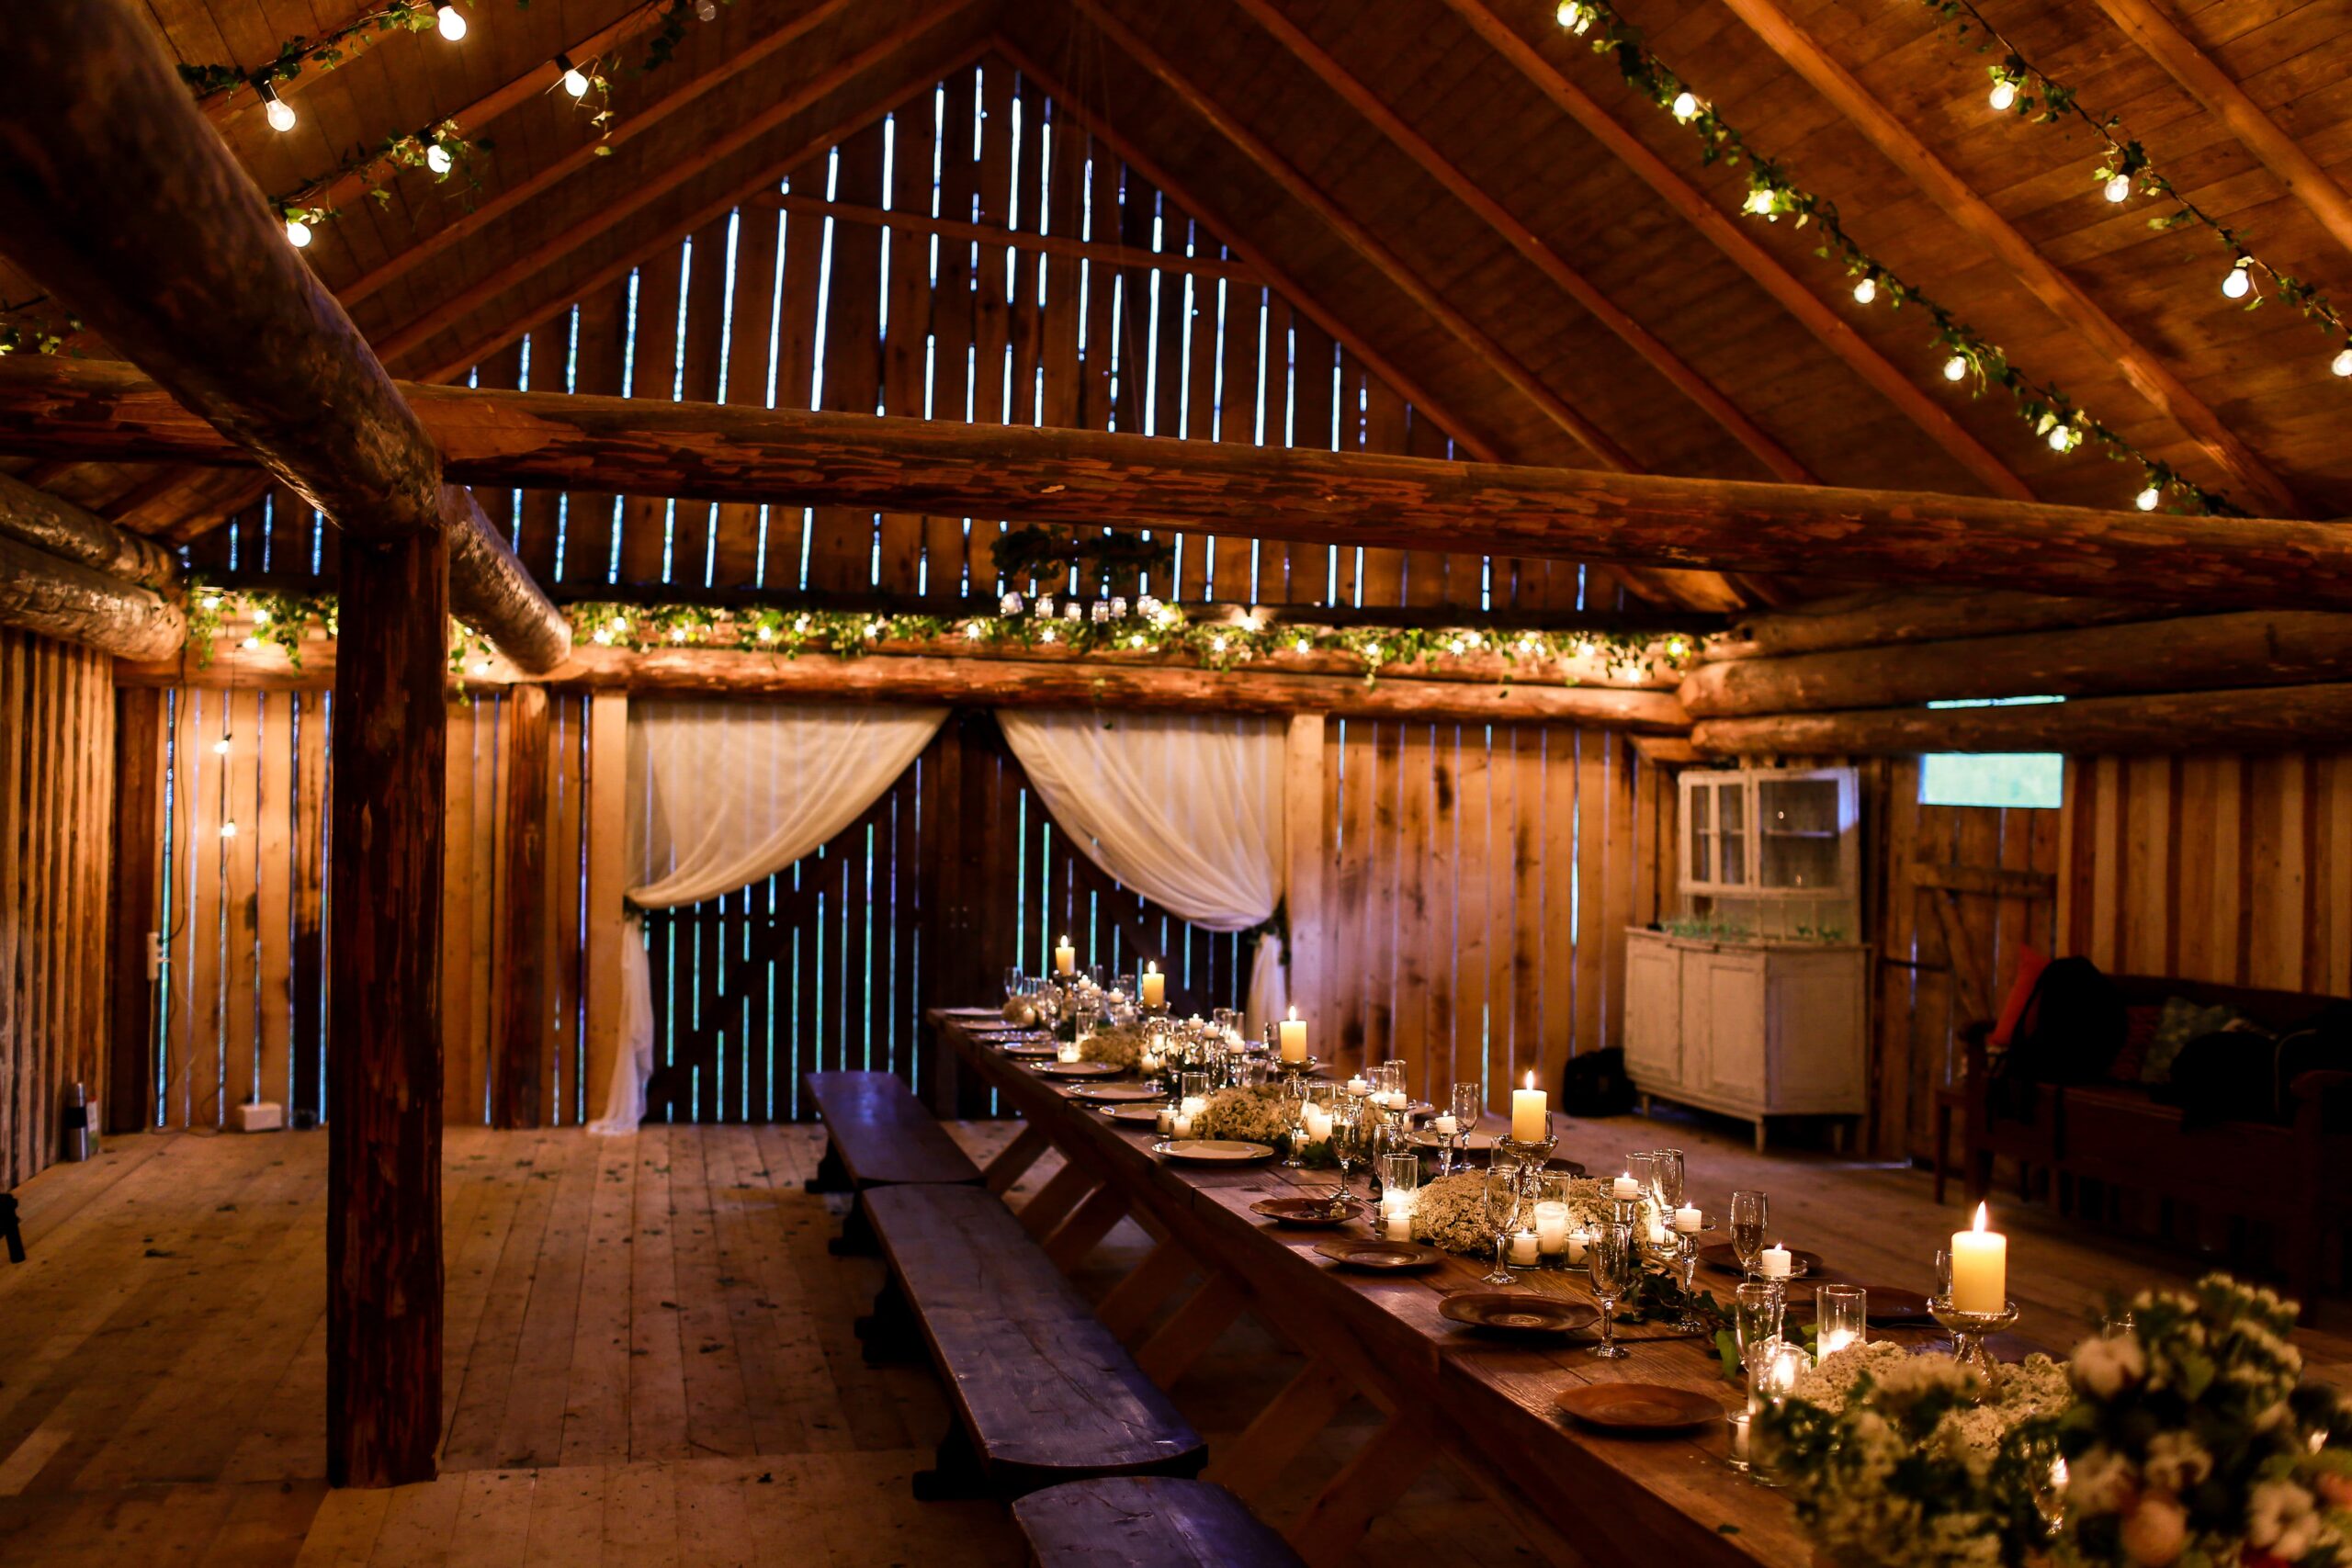 Bridebook.co.uk Rustic candlelit barn wedding venue